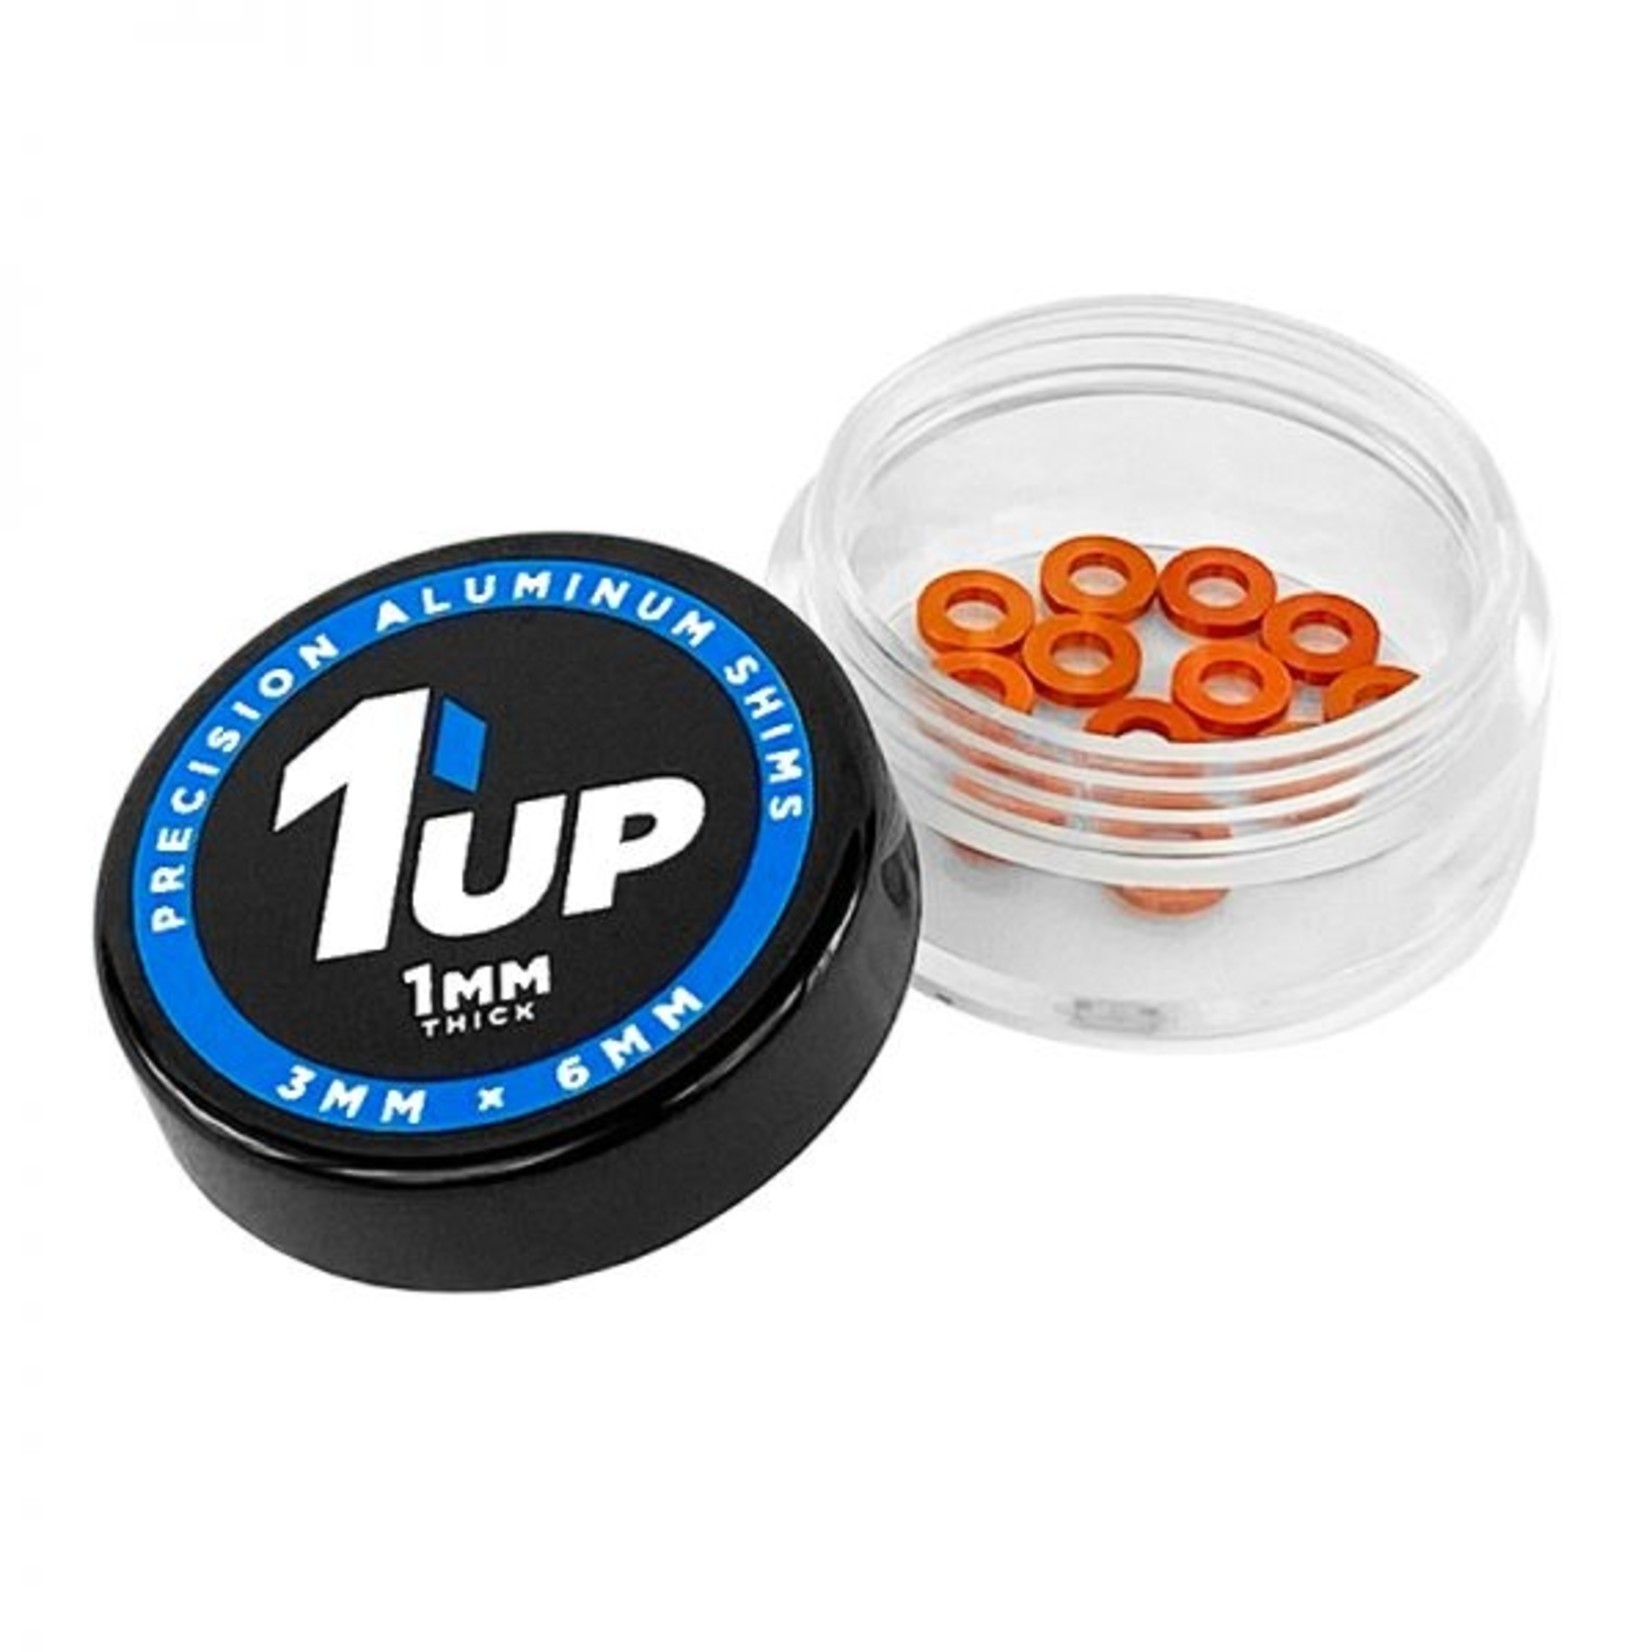 1UP Racing 3x6x1mm Precision Aluminum Shims, Orange, 12pcs